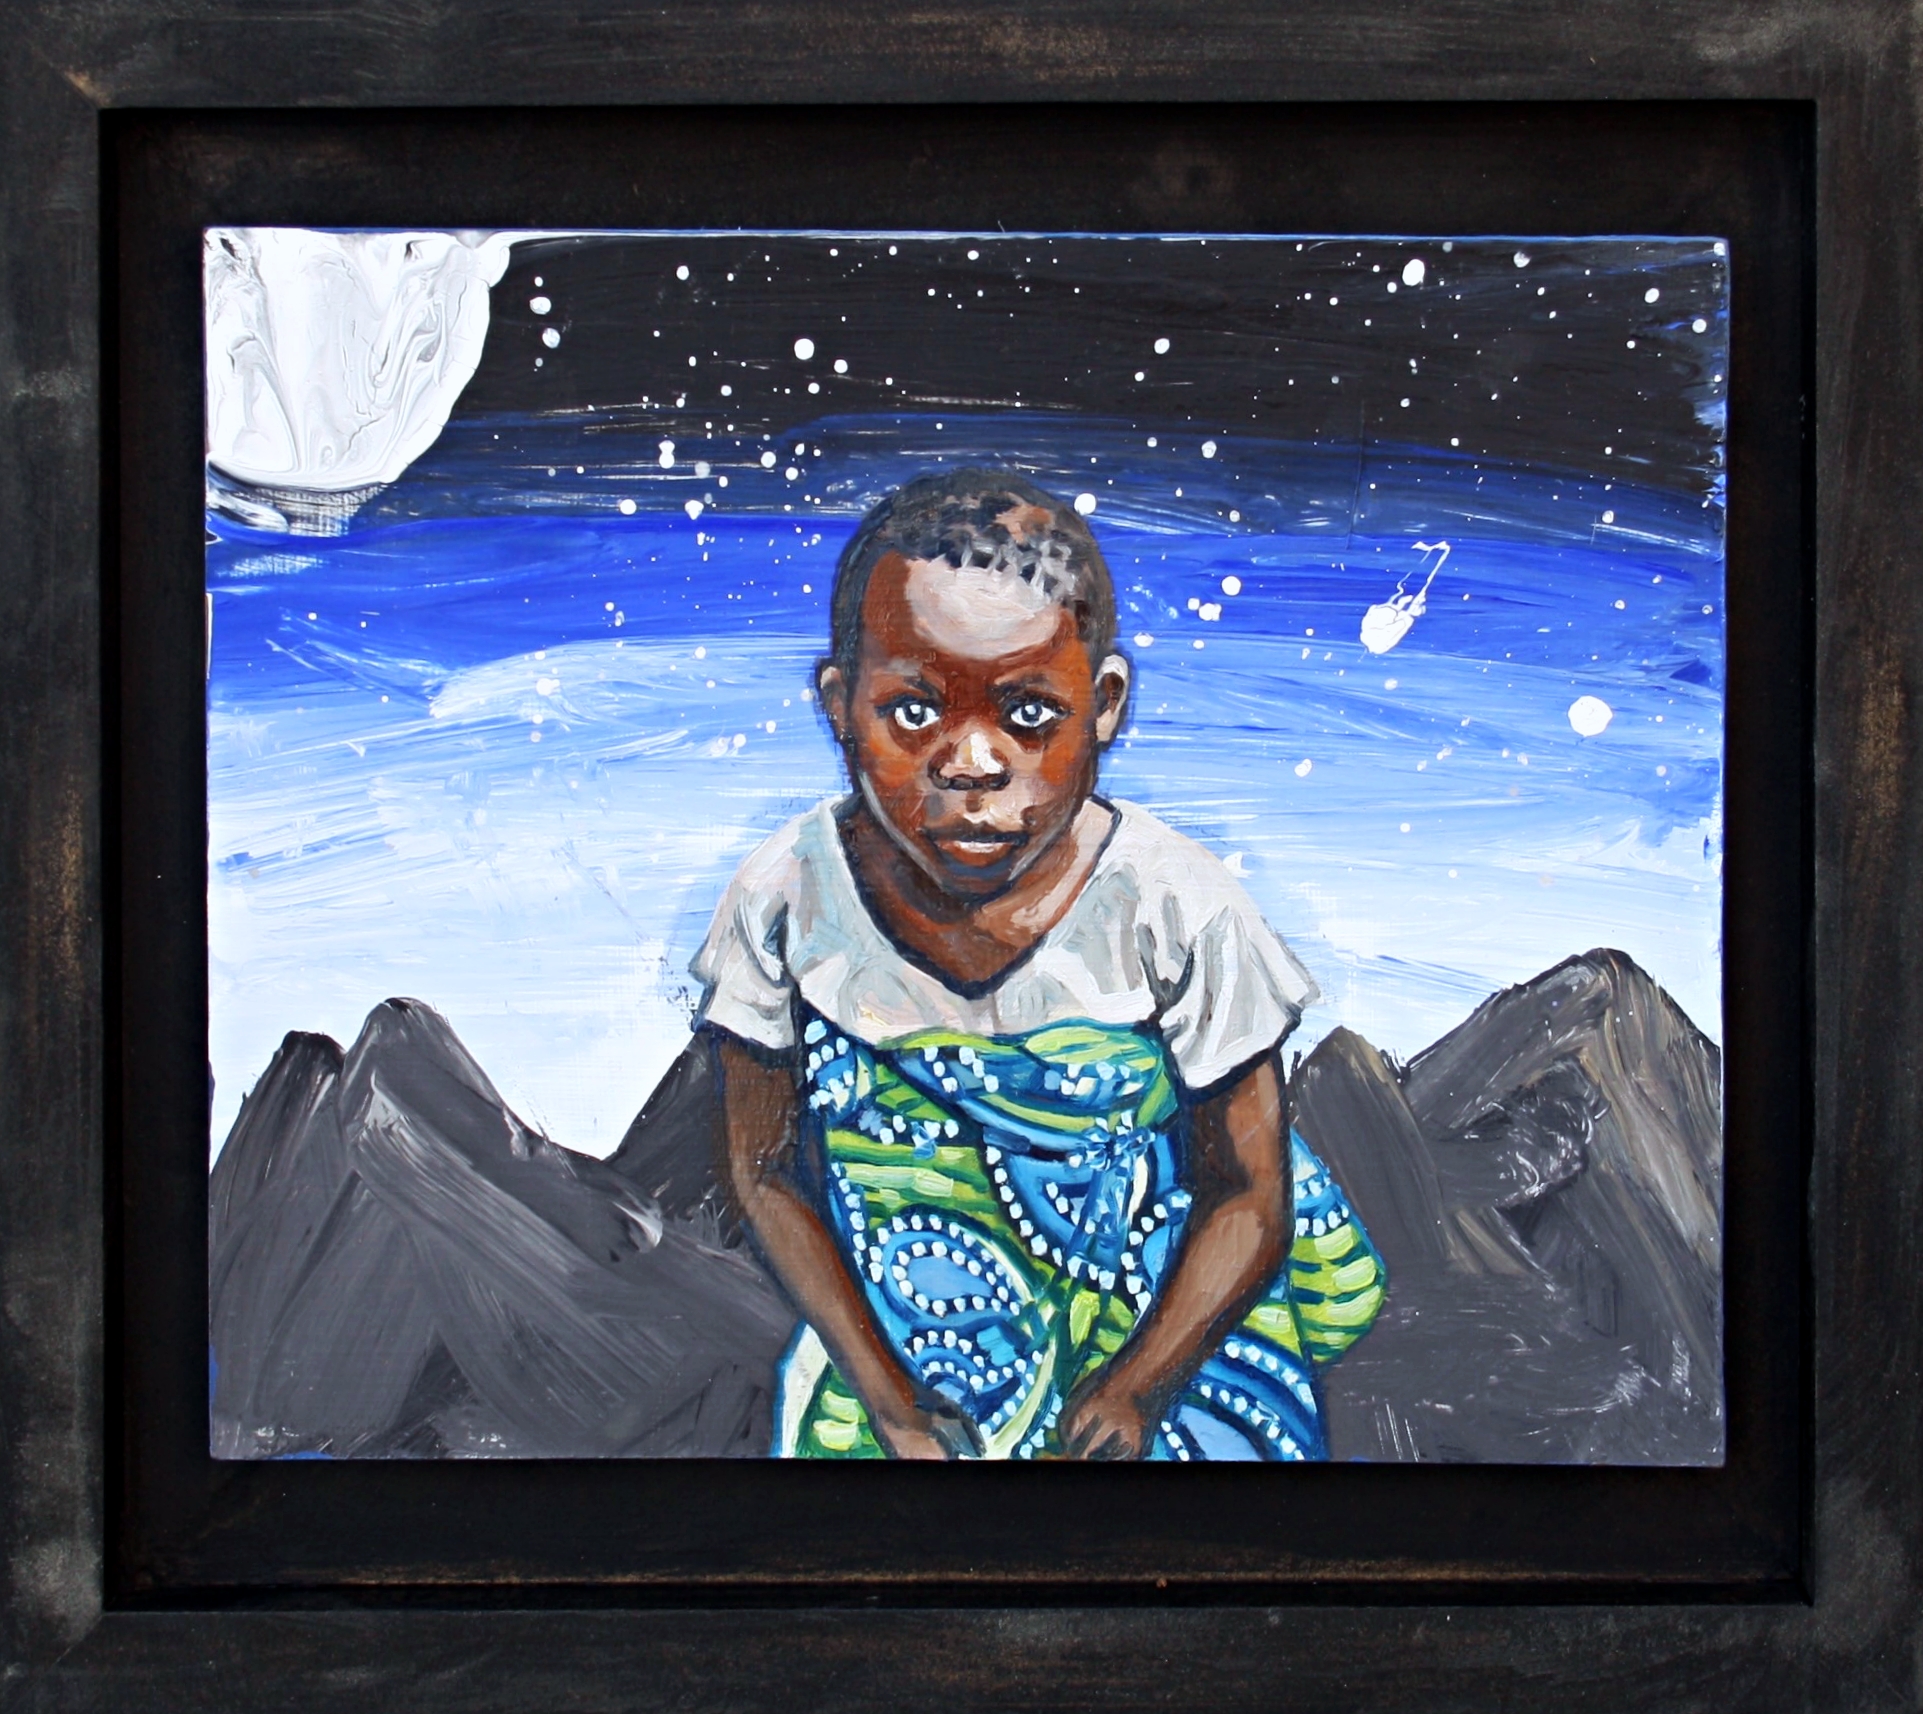 school art artist geoff phillips maple creek home of hope images children africa rwanda kenya india child baby dream centre alberta canada paint painting 